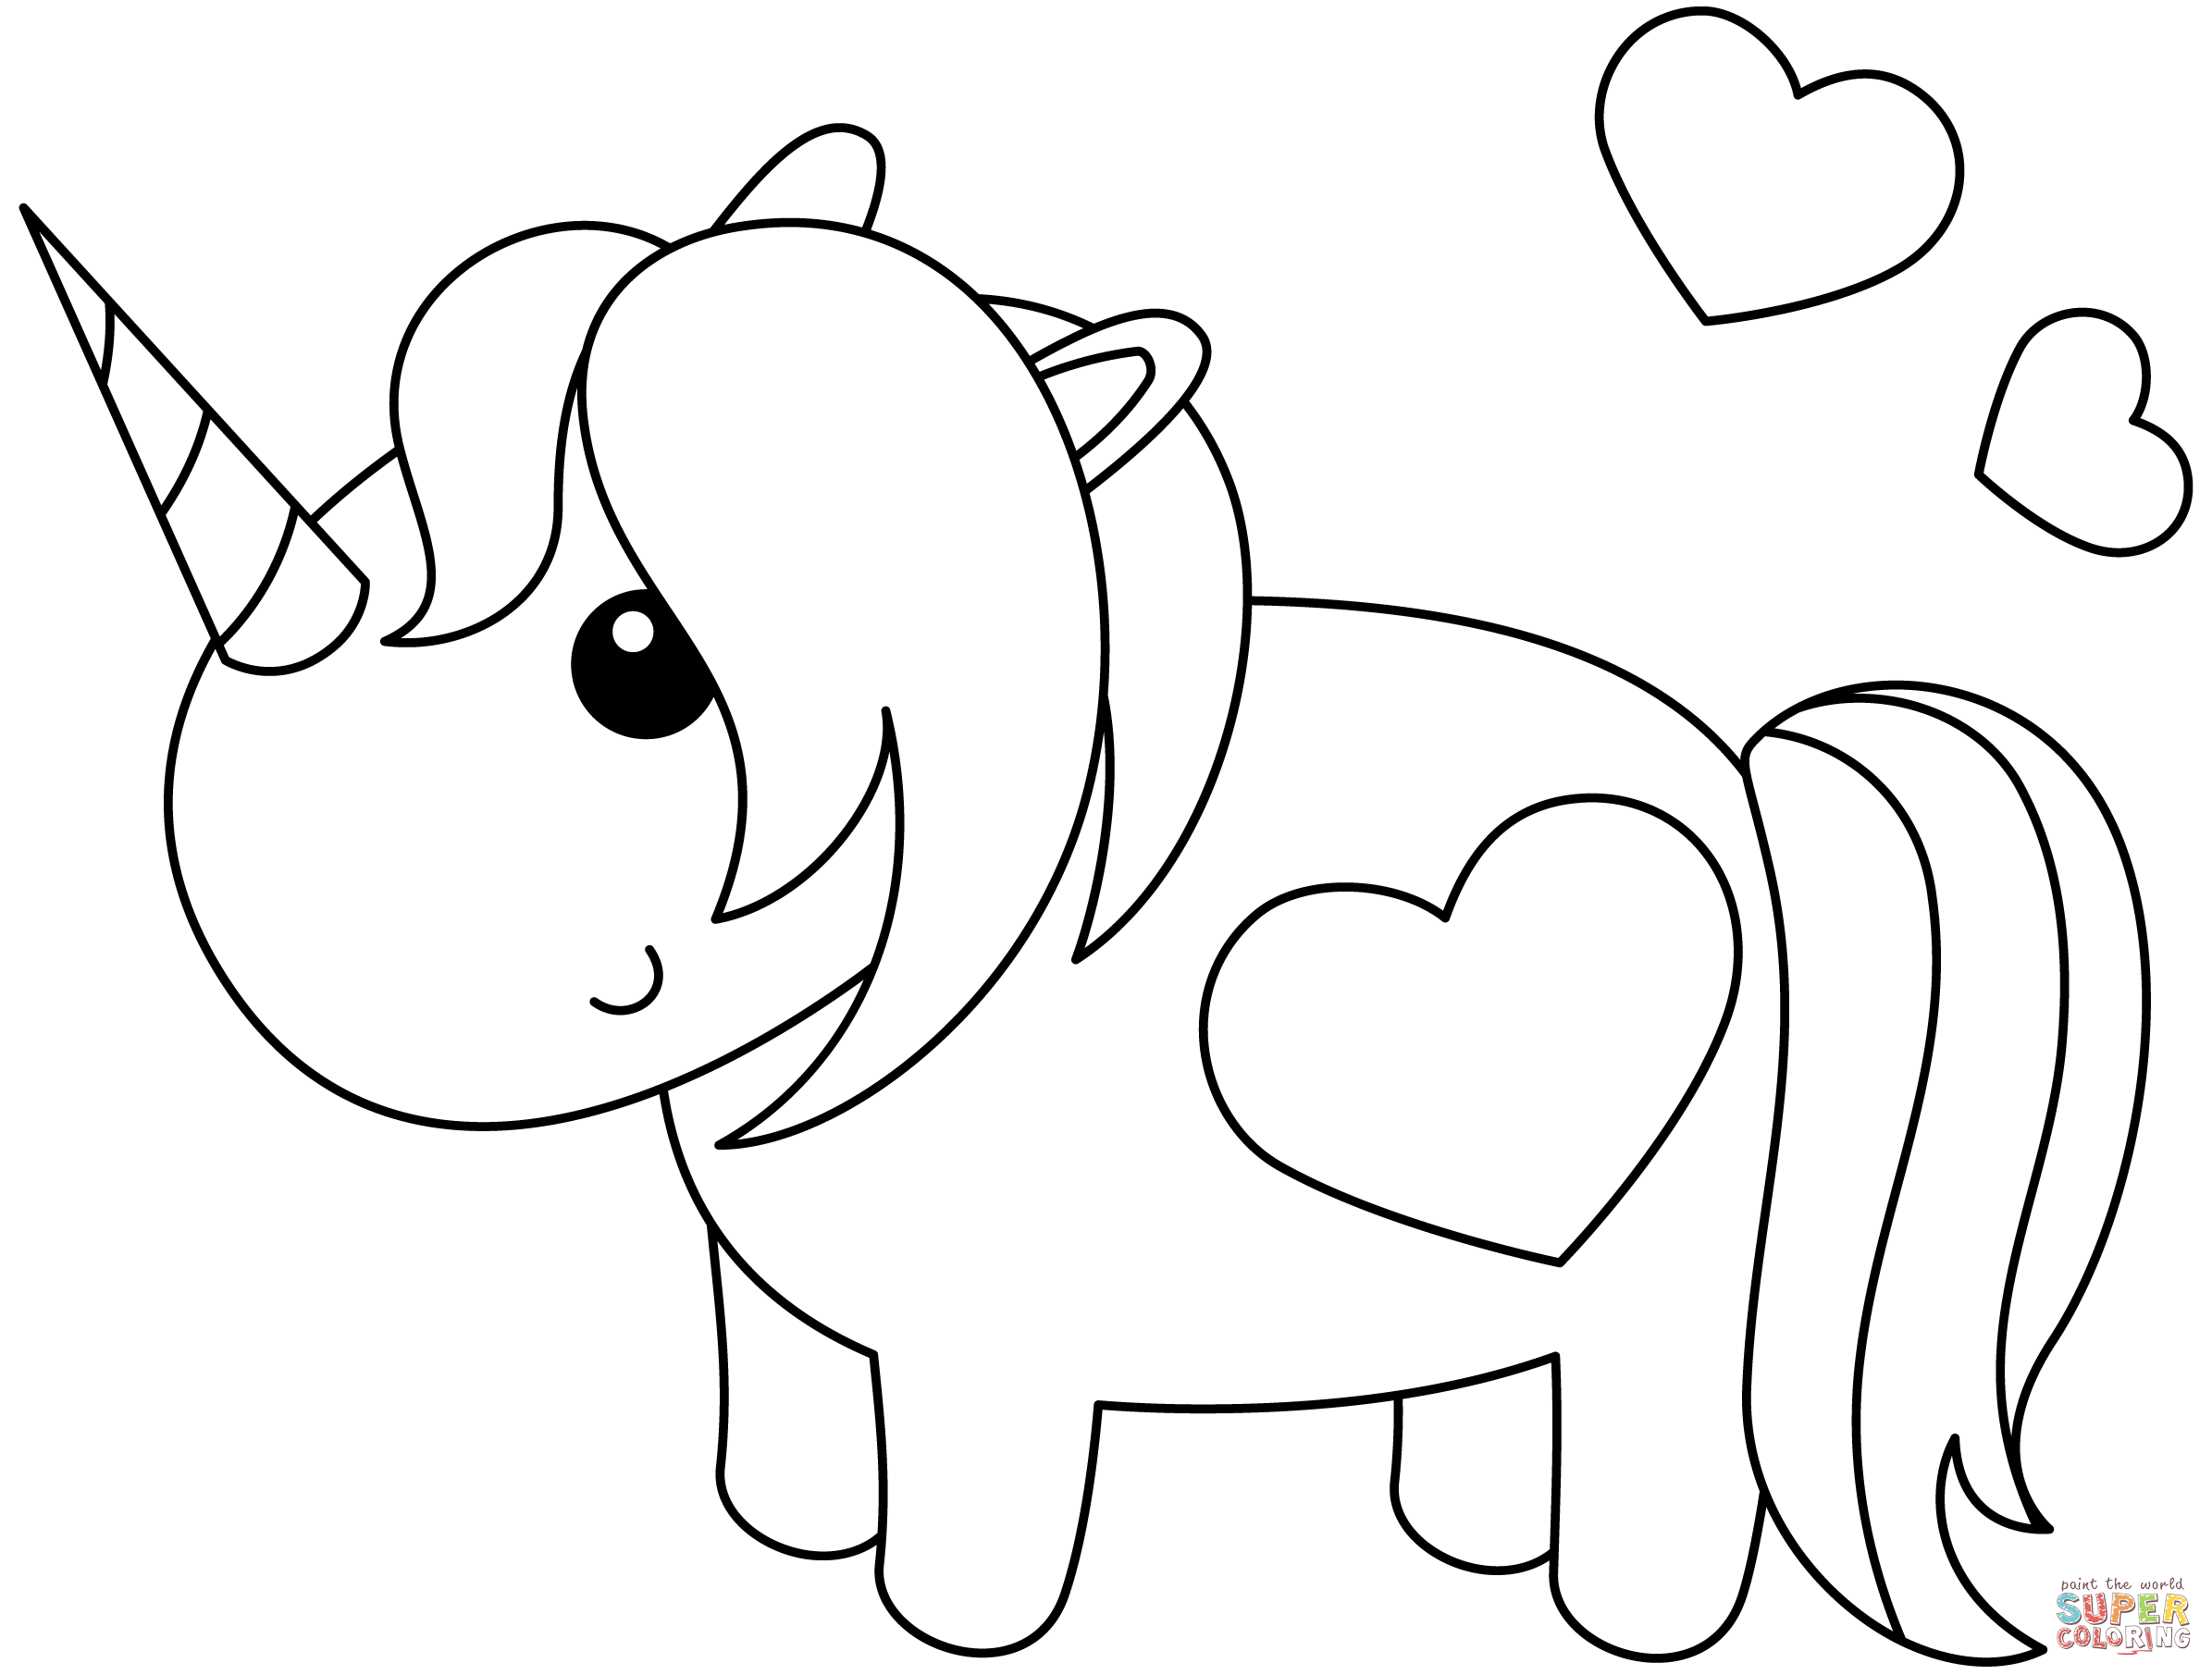 Kawaii unicorn coloring page free printable coloring pages